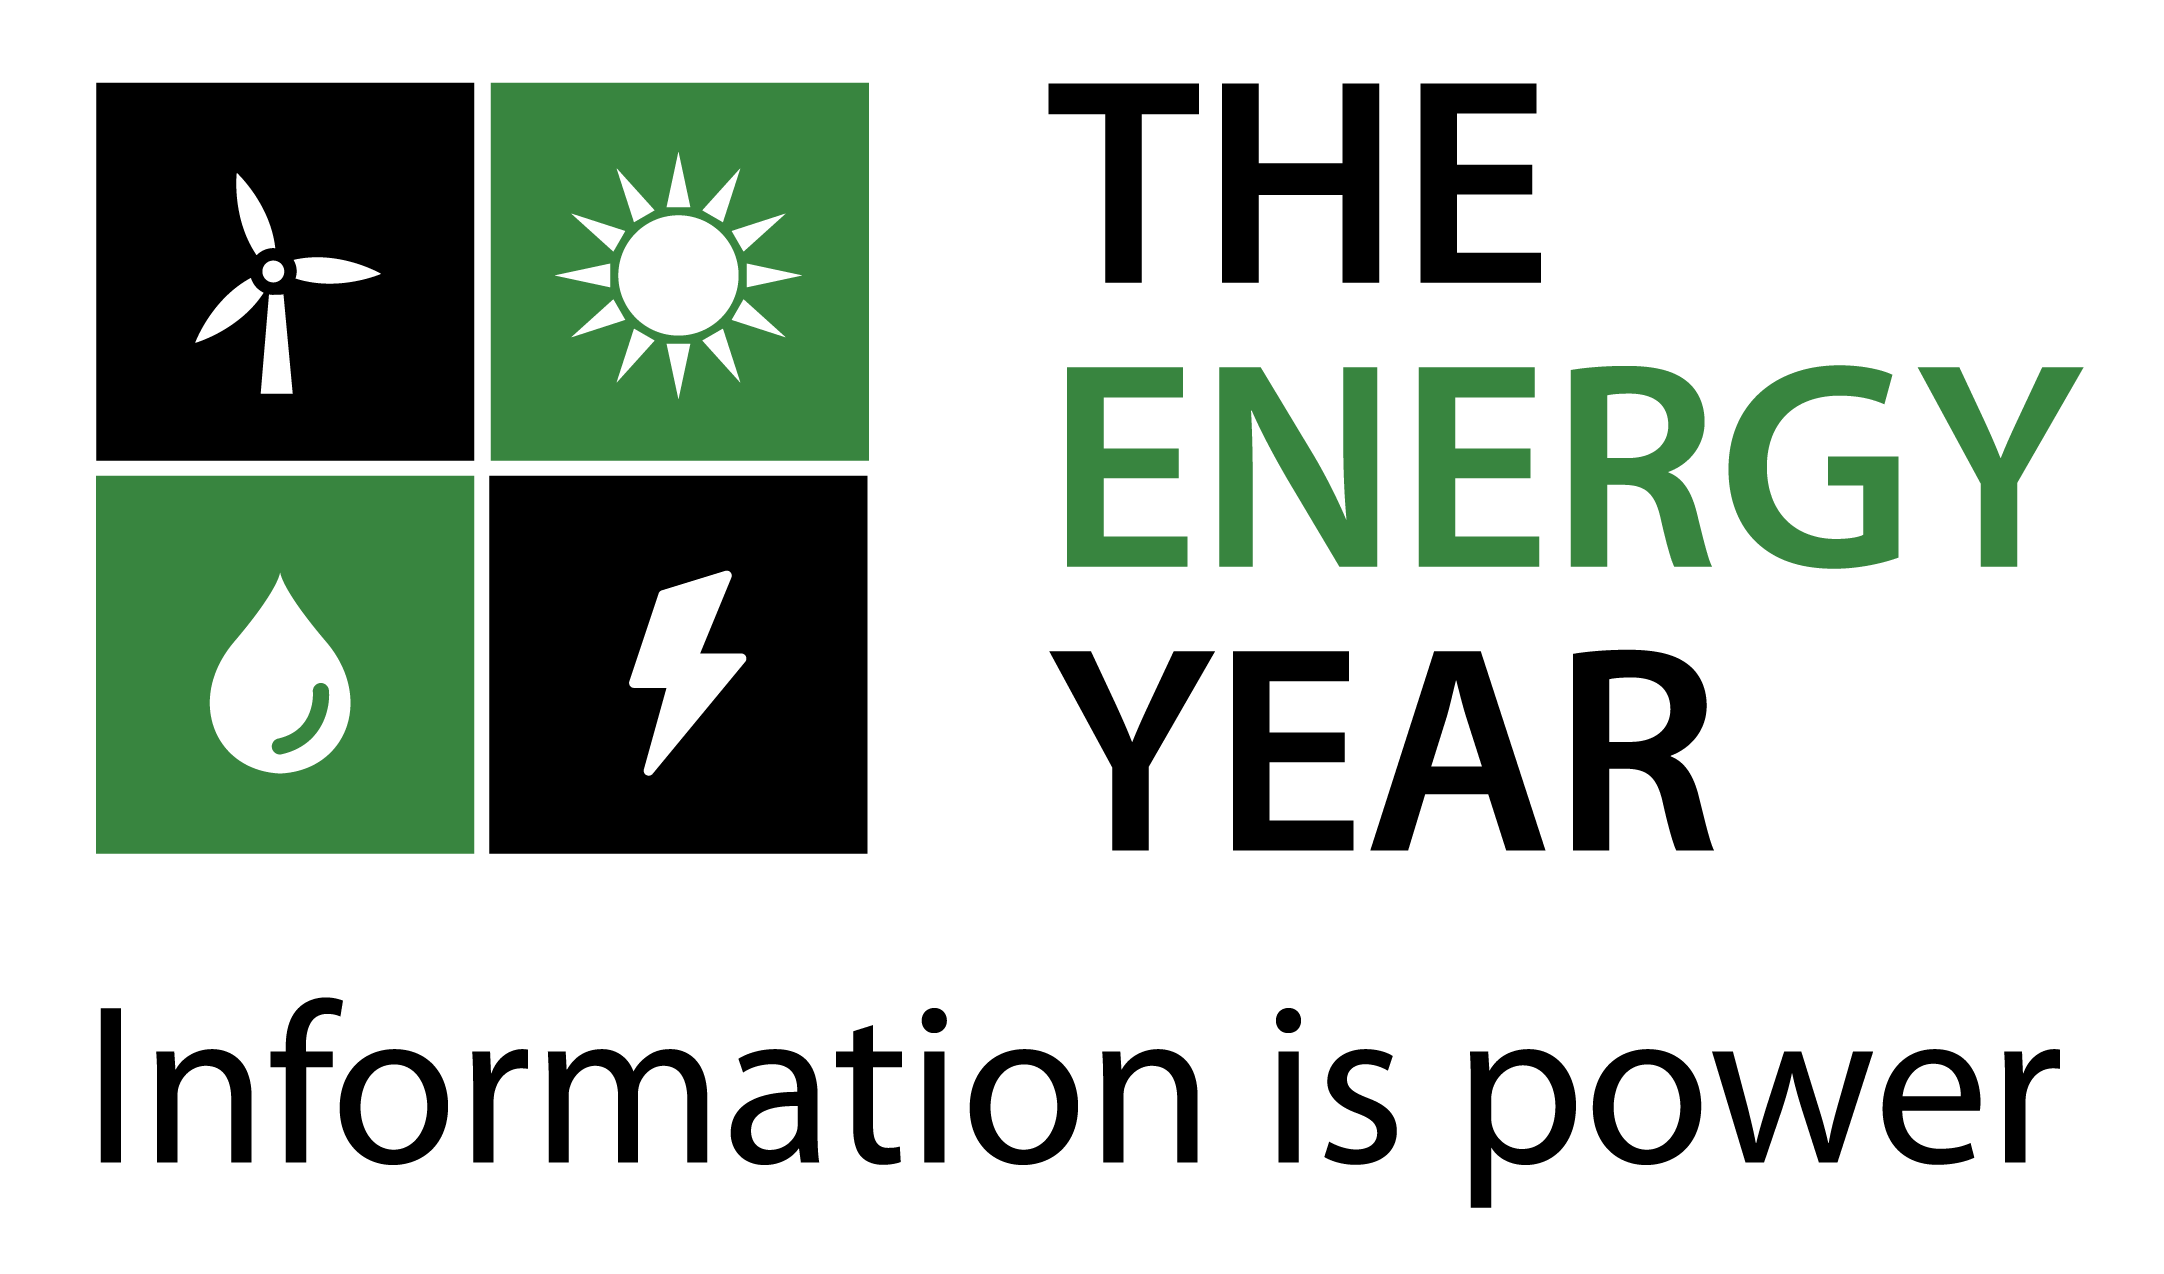 The Energy Year